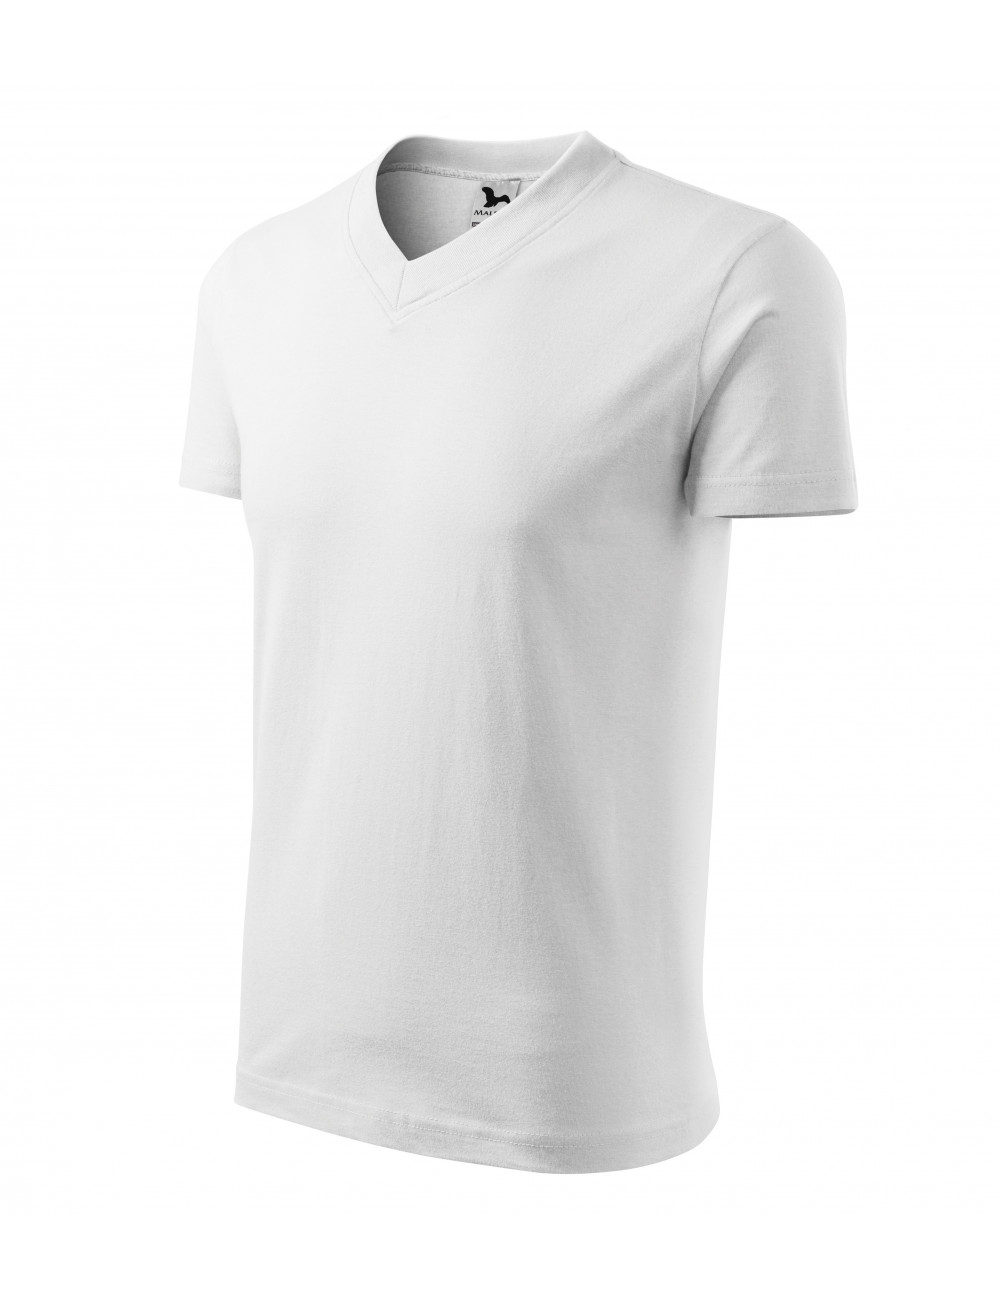 Koszulka unisex v-neck 102 biały Adler Malfini